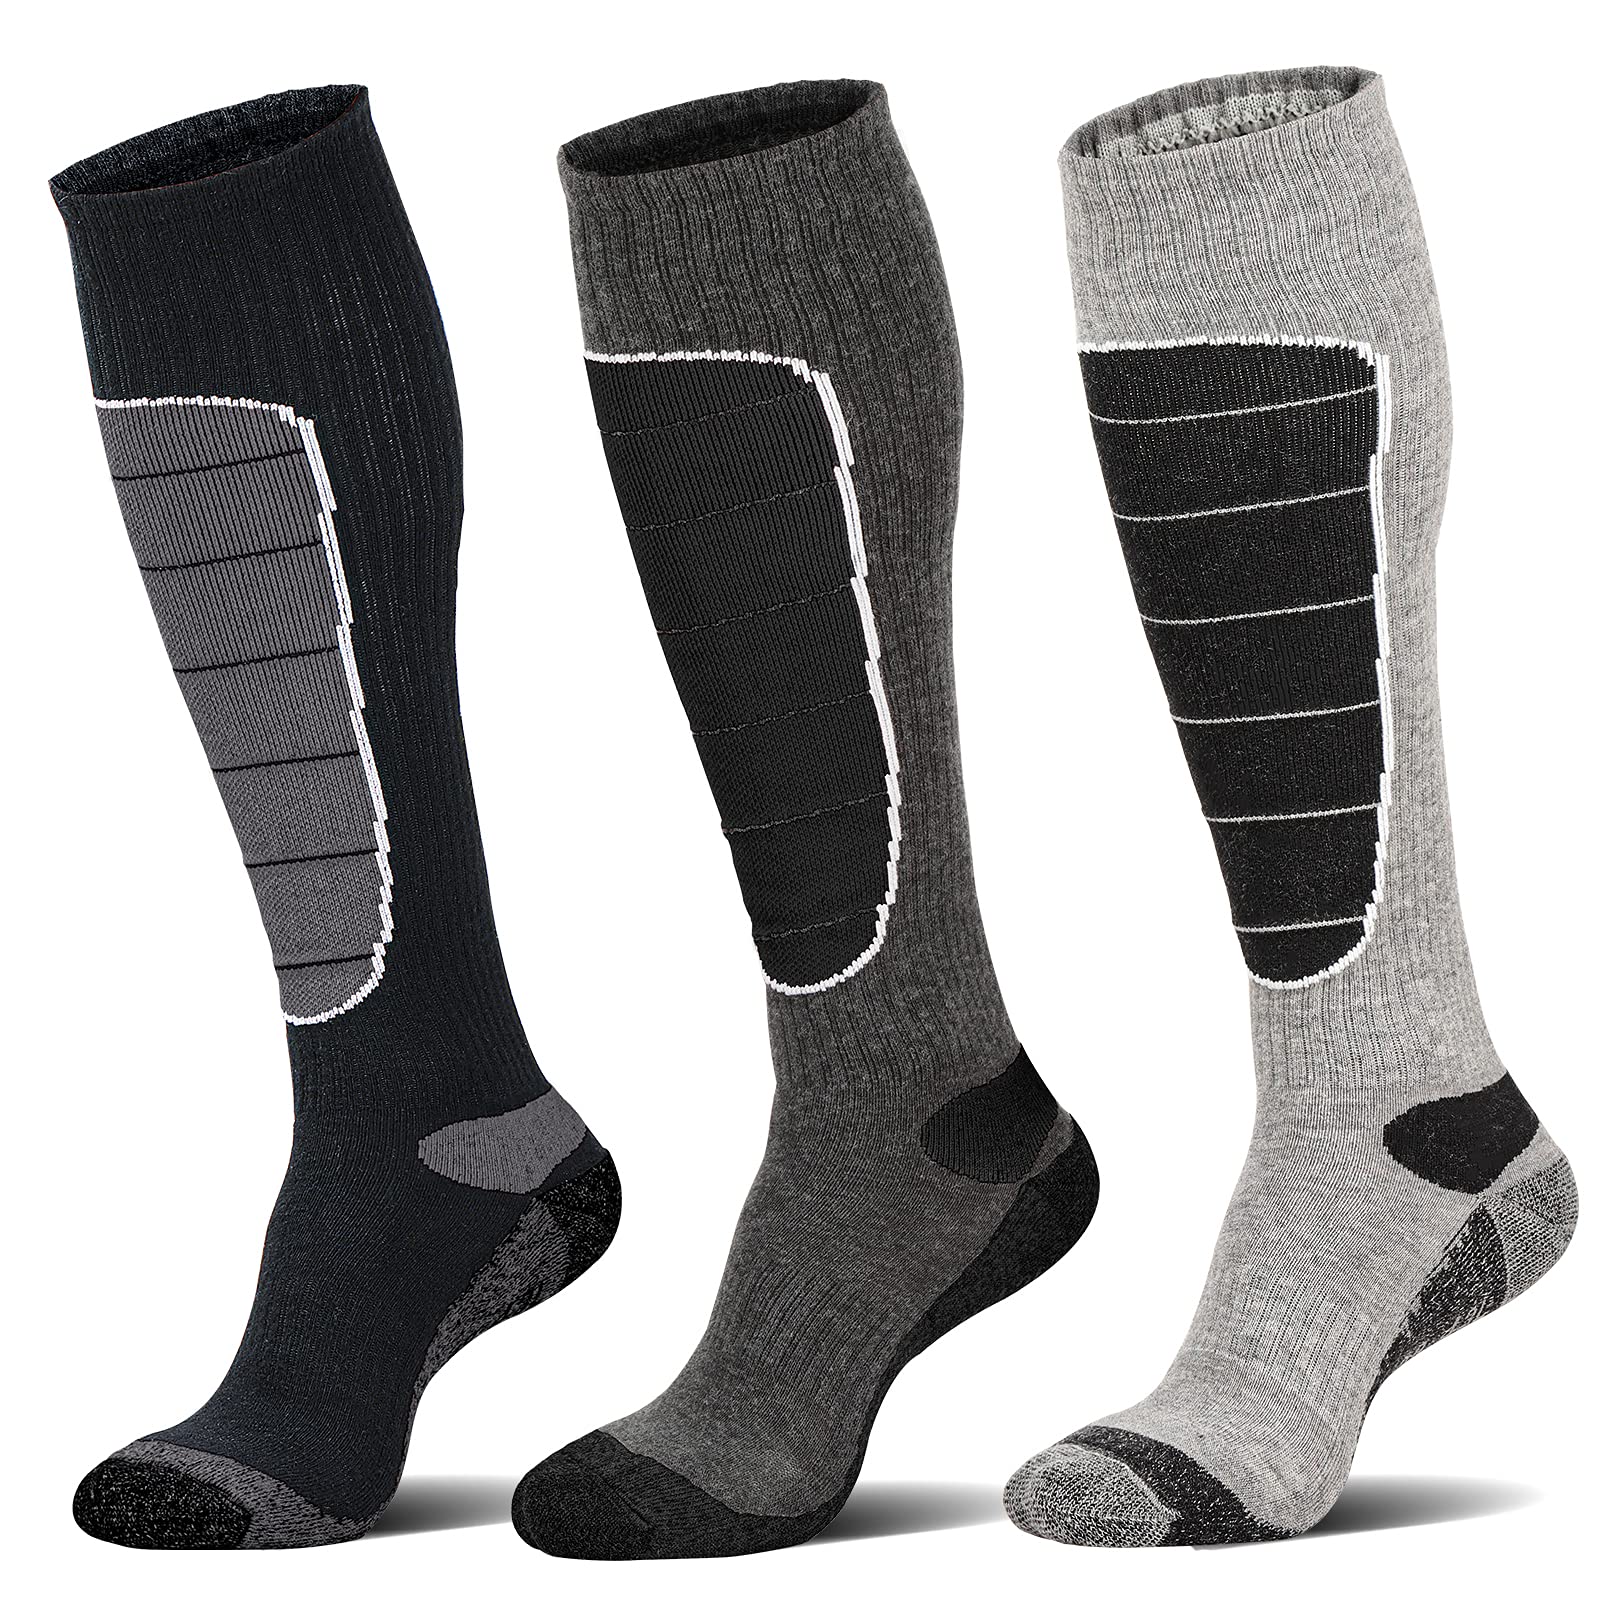 Merino Wool Ski Socks, Cold Weather Socks for Snowboarding, Snow